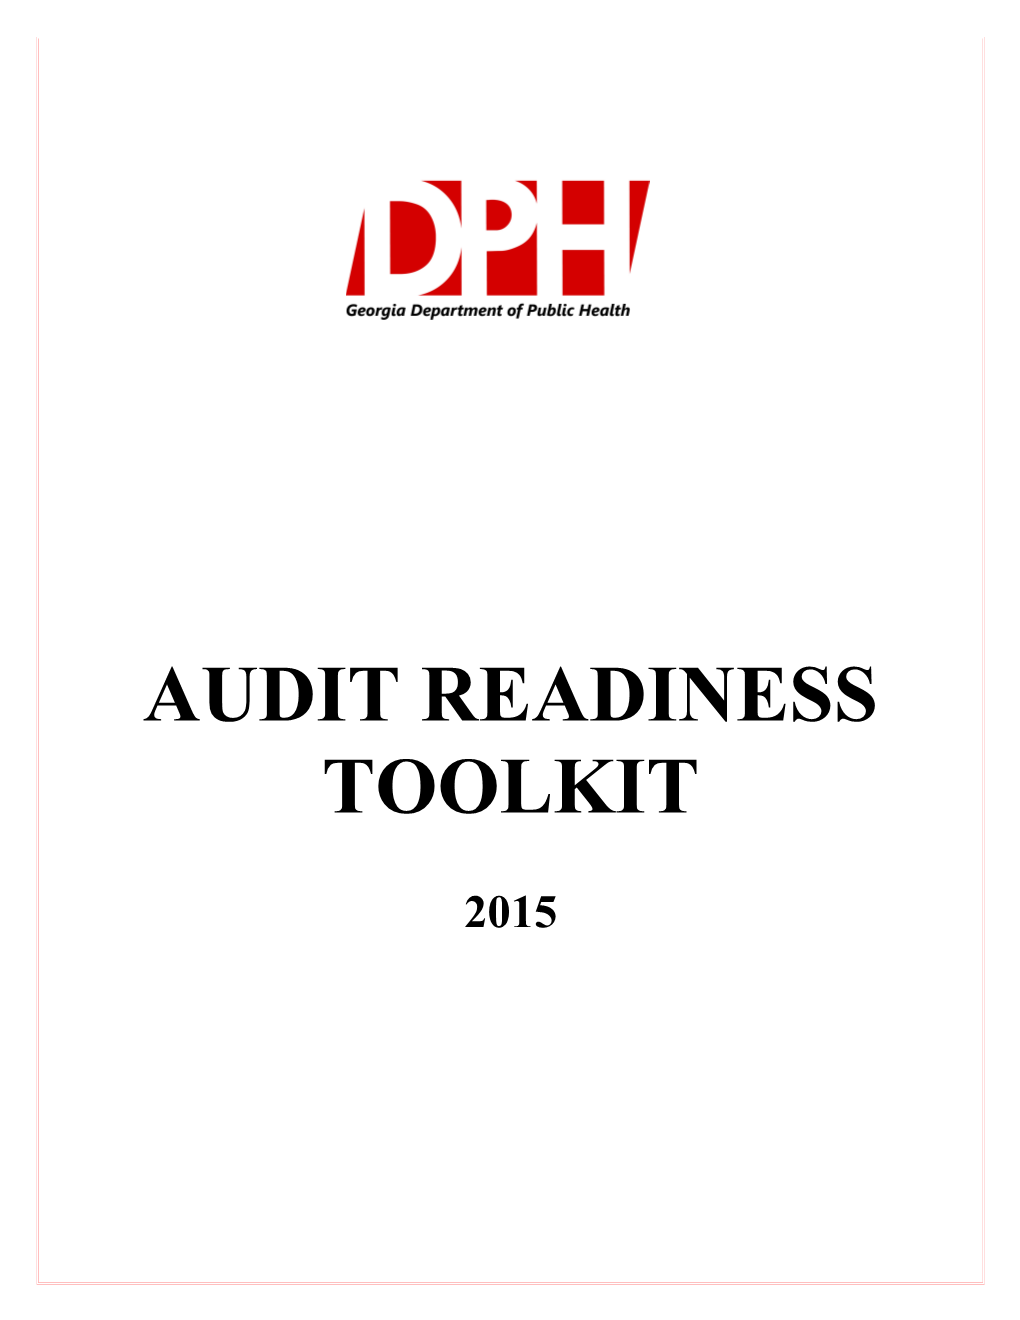 Georgia Department of Public Health Accountability Audit Readiness Program Toolkit